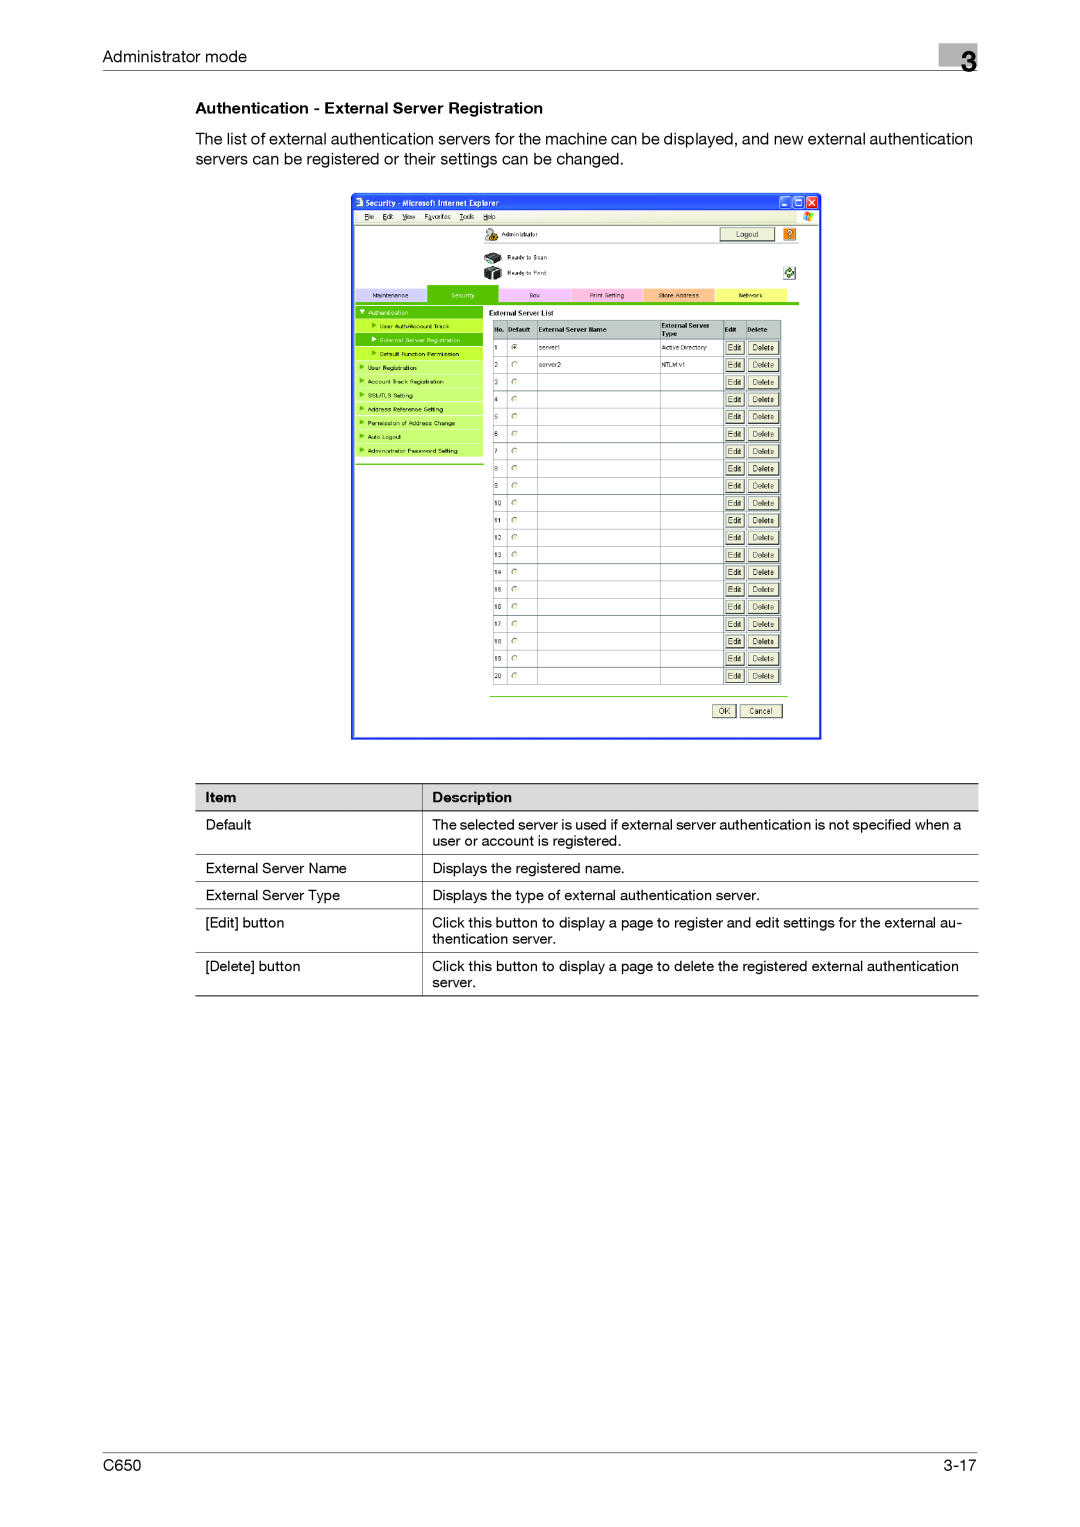 Konica Minolta C650 manual Administrator mode, Authentication - External Server Registration, 3-17 